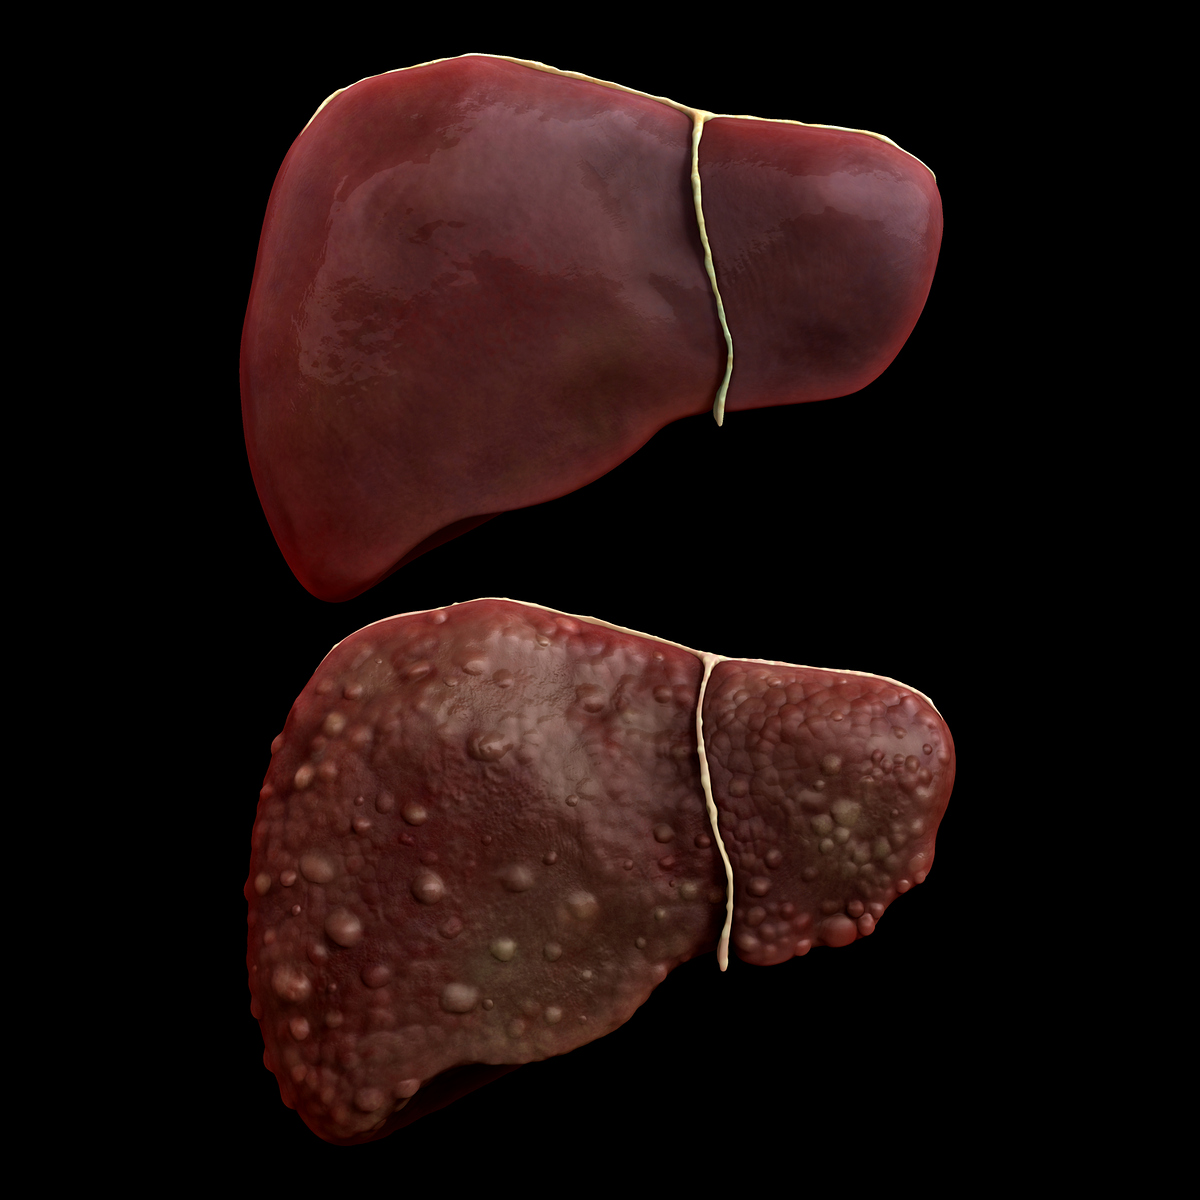 Healthy Liver Compared to  Cirrhotic Liver